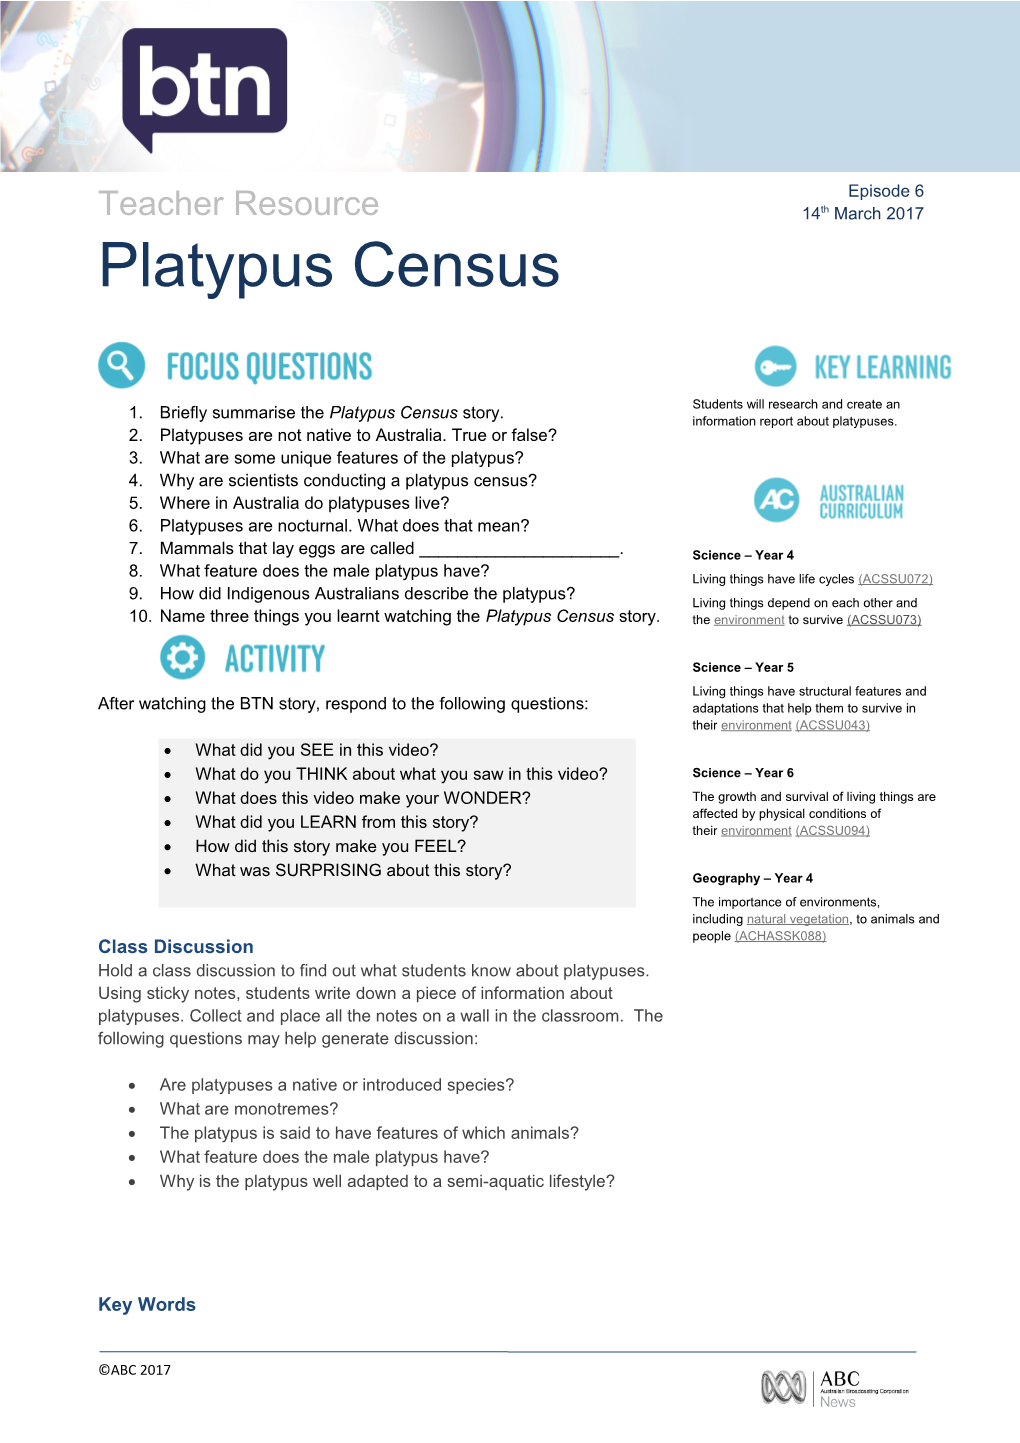 1. Briefly Summarise the Platypus Census Story